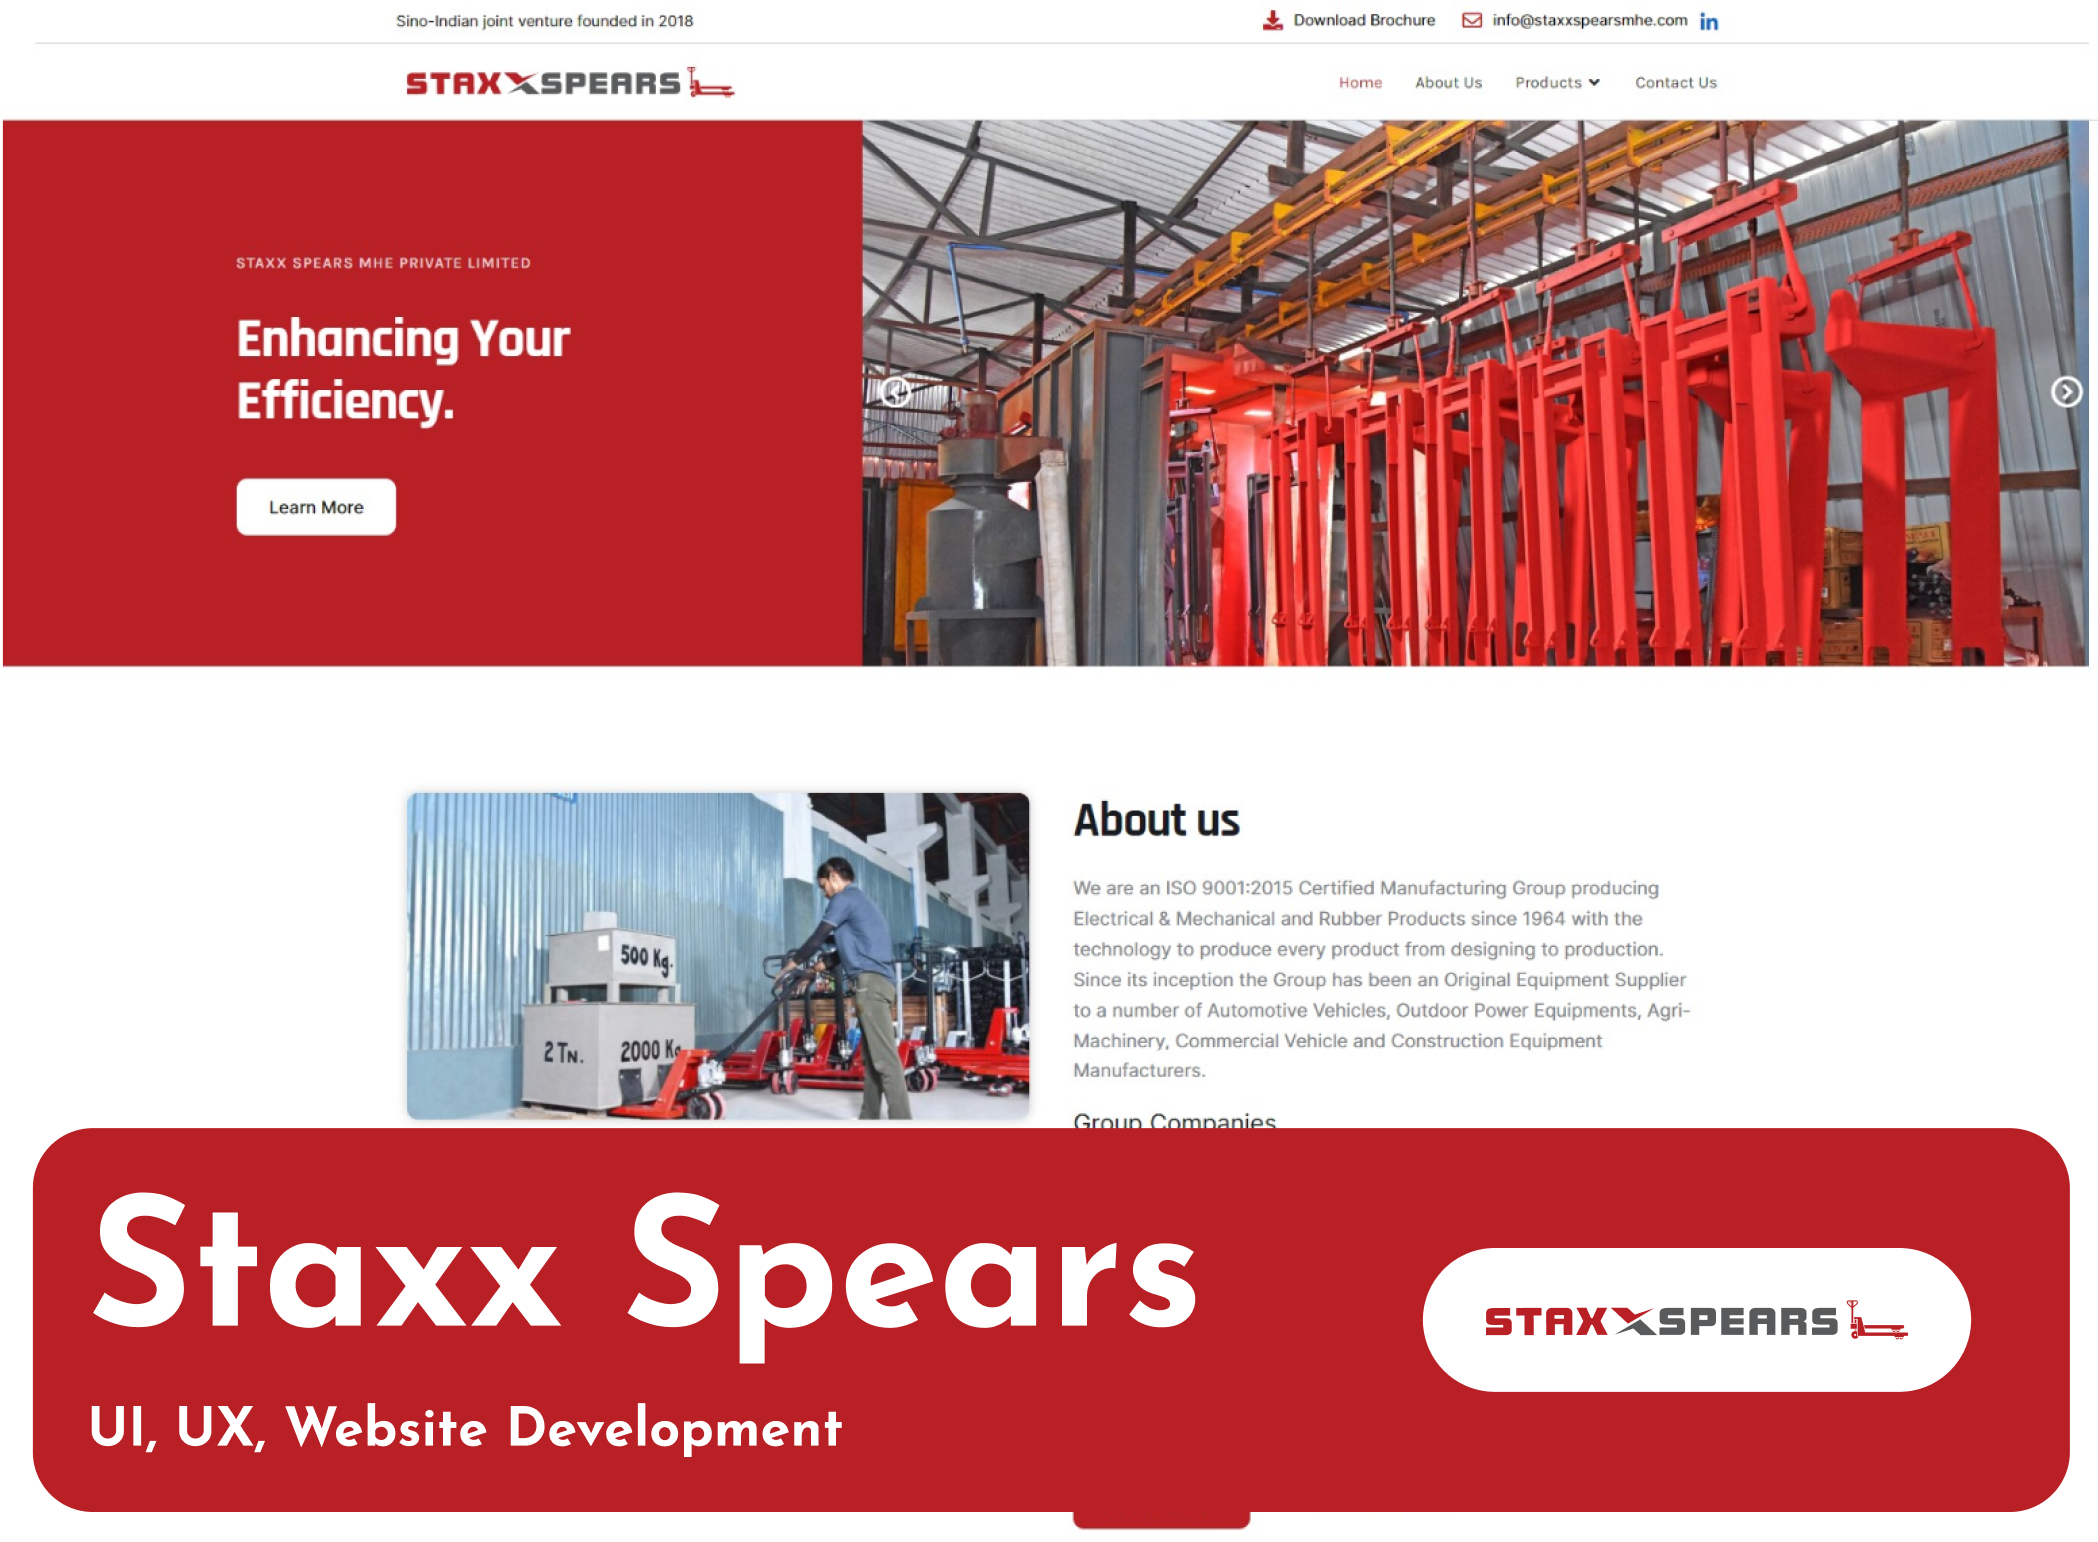 StaxXspears website designed by ALFYI